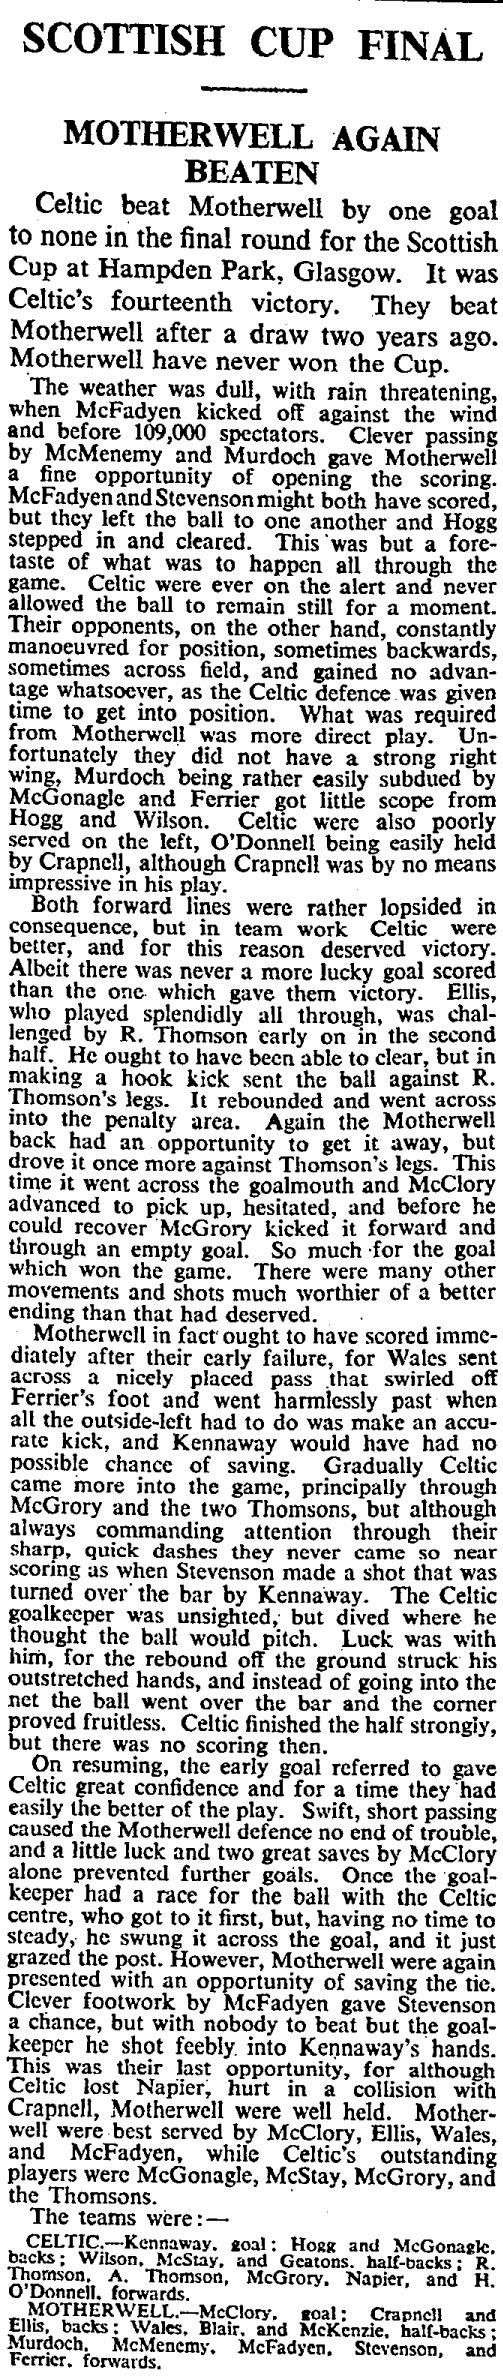 1933 Scottish Cup Final Newspaper Report